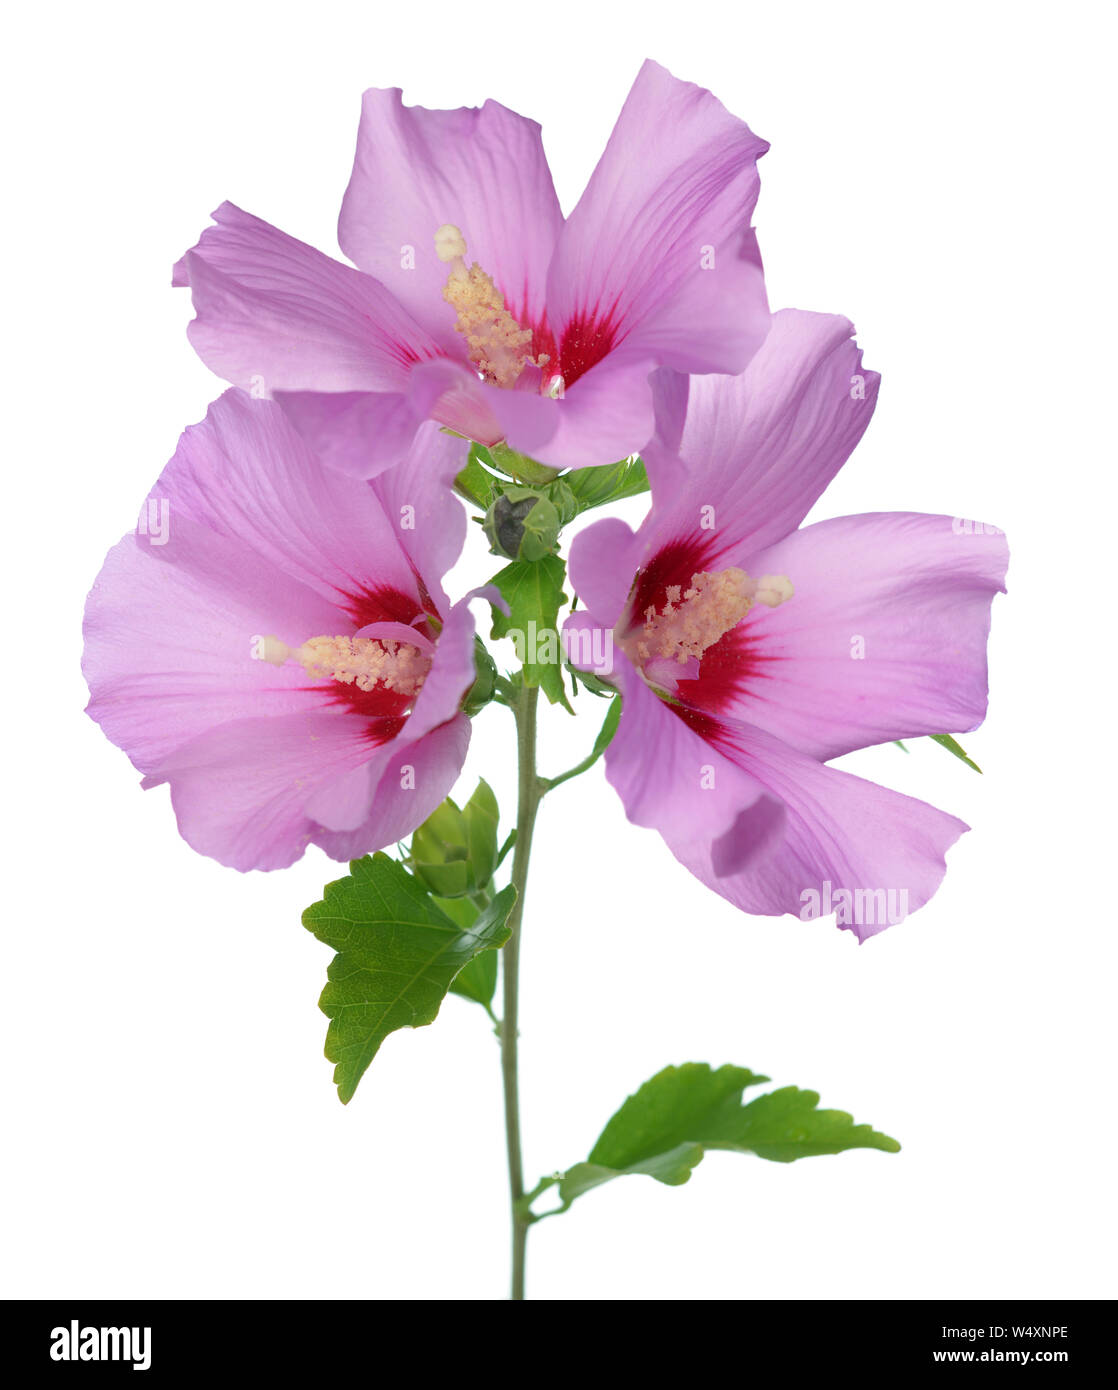 Hibiscus flower, the mallow family, Malvaceae Stock Photo